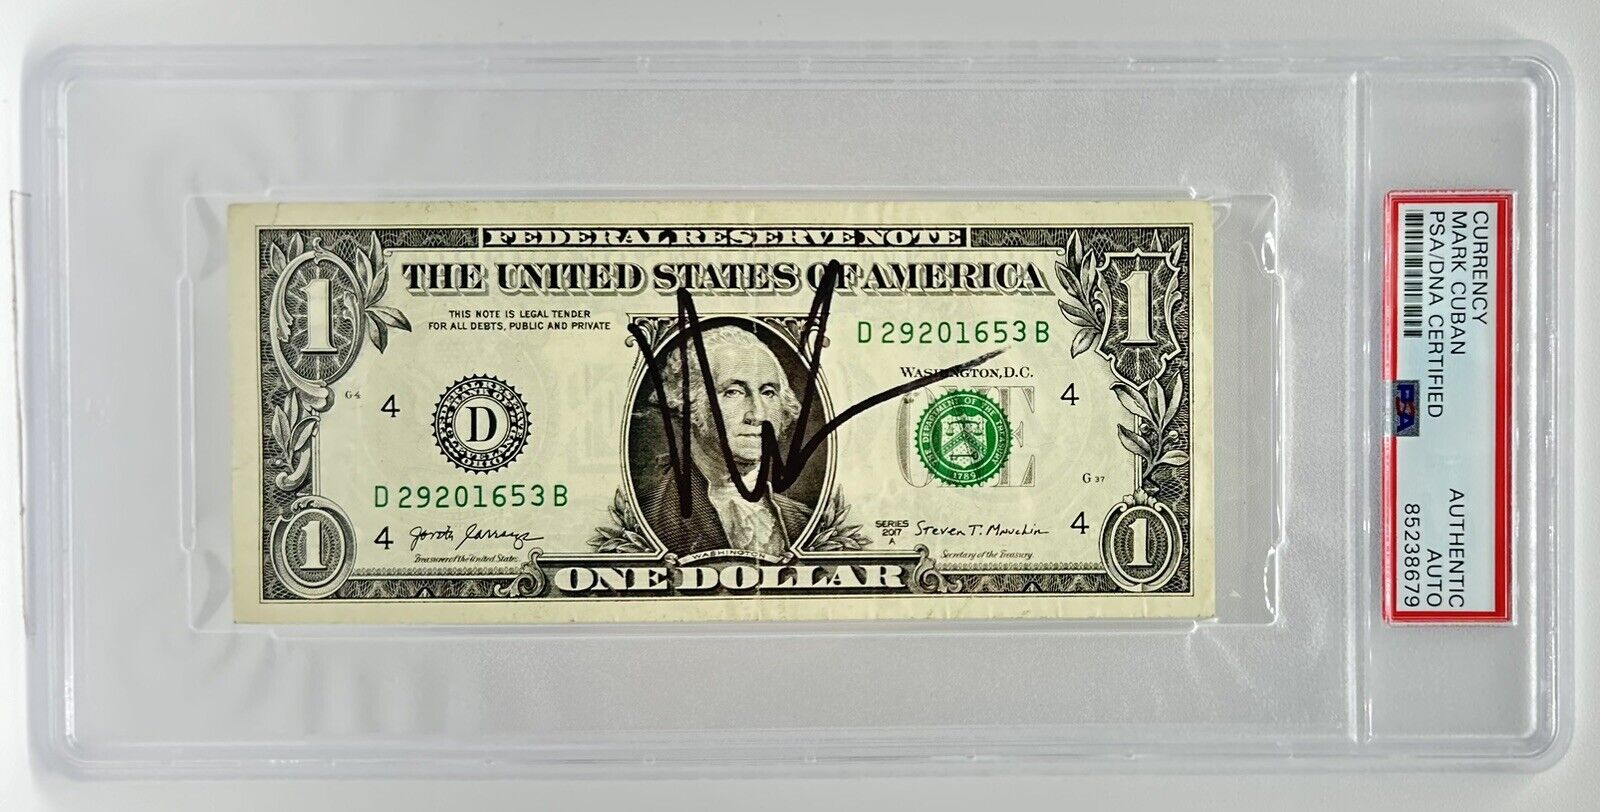 Mark Cuban Signed $1 One Dollar Bill Autographed Mavericks Shark Tank PSA/DNA